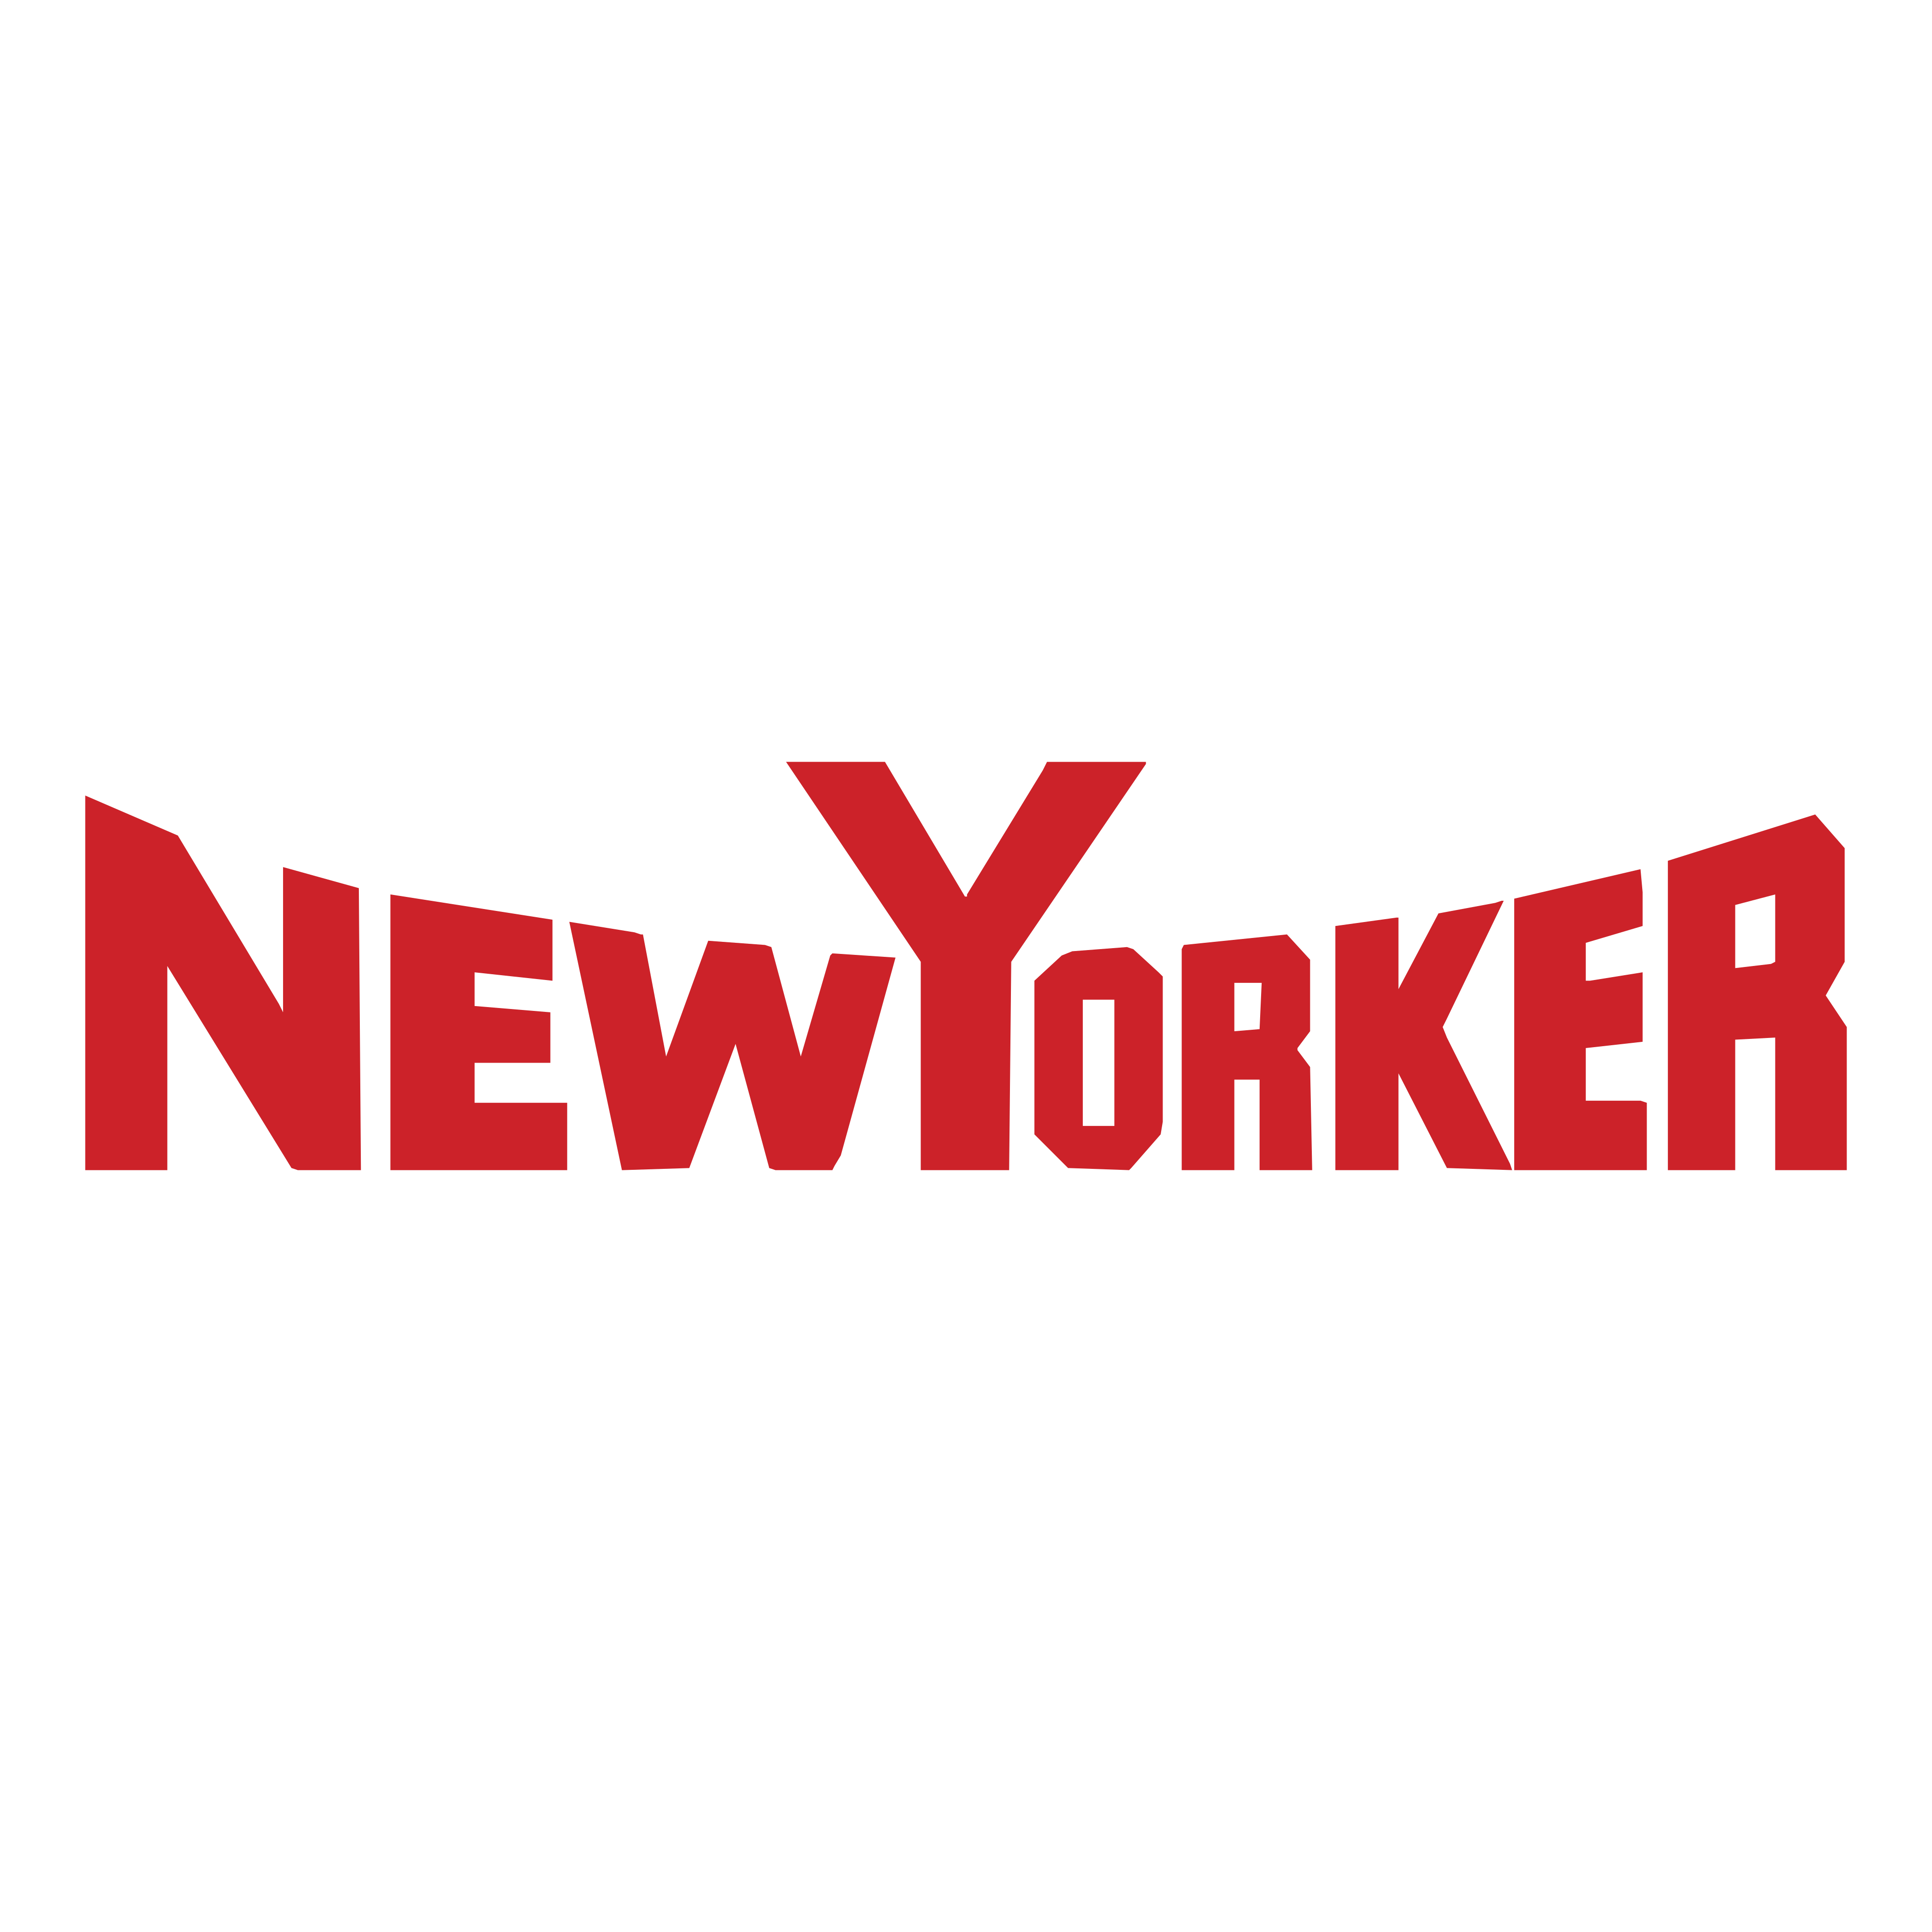 New yorker товары. Нью йоркер. Логотип магазина Нью-Йоркера. Бренд New Yorker. Магазин New Yorker логотип.